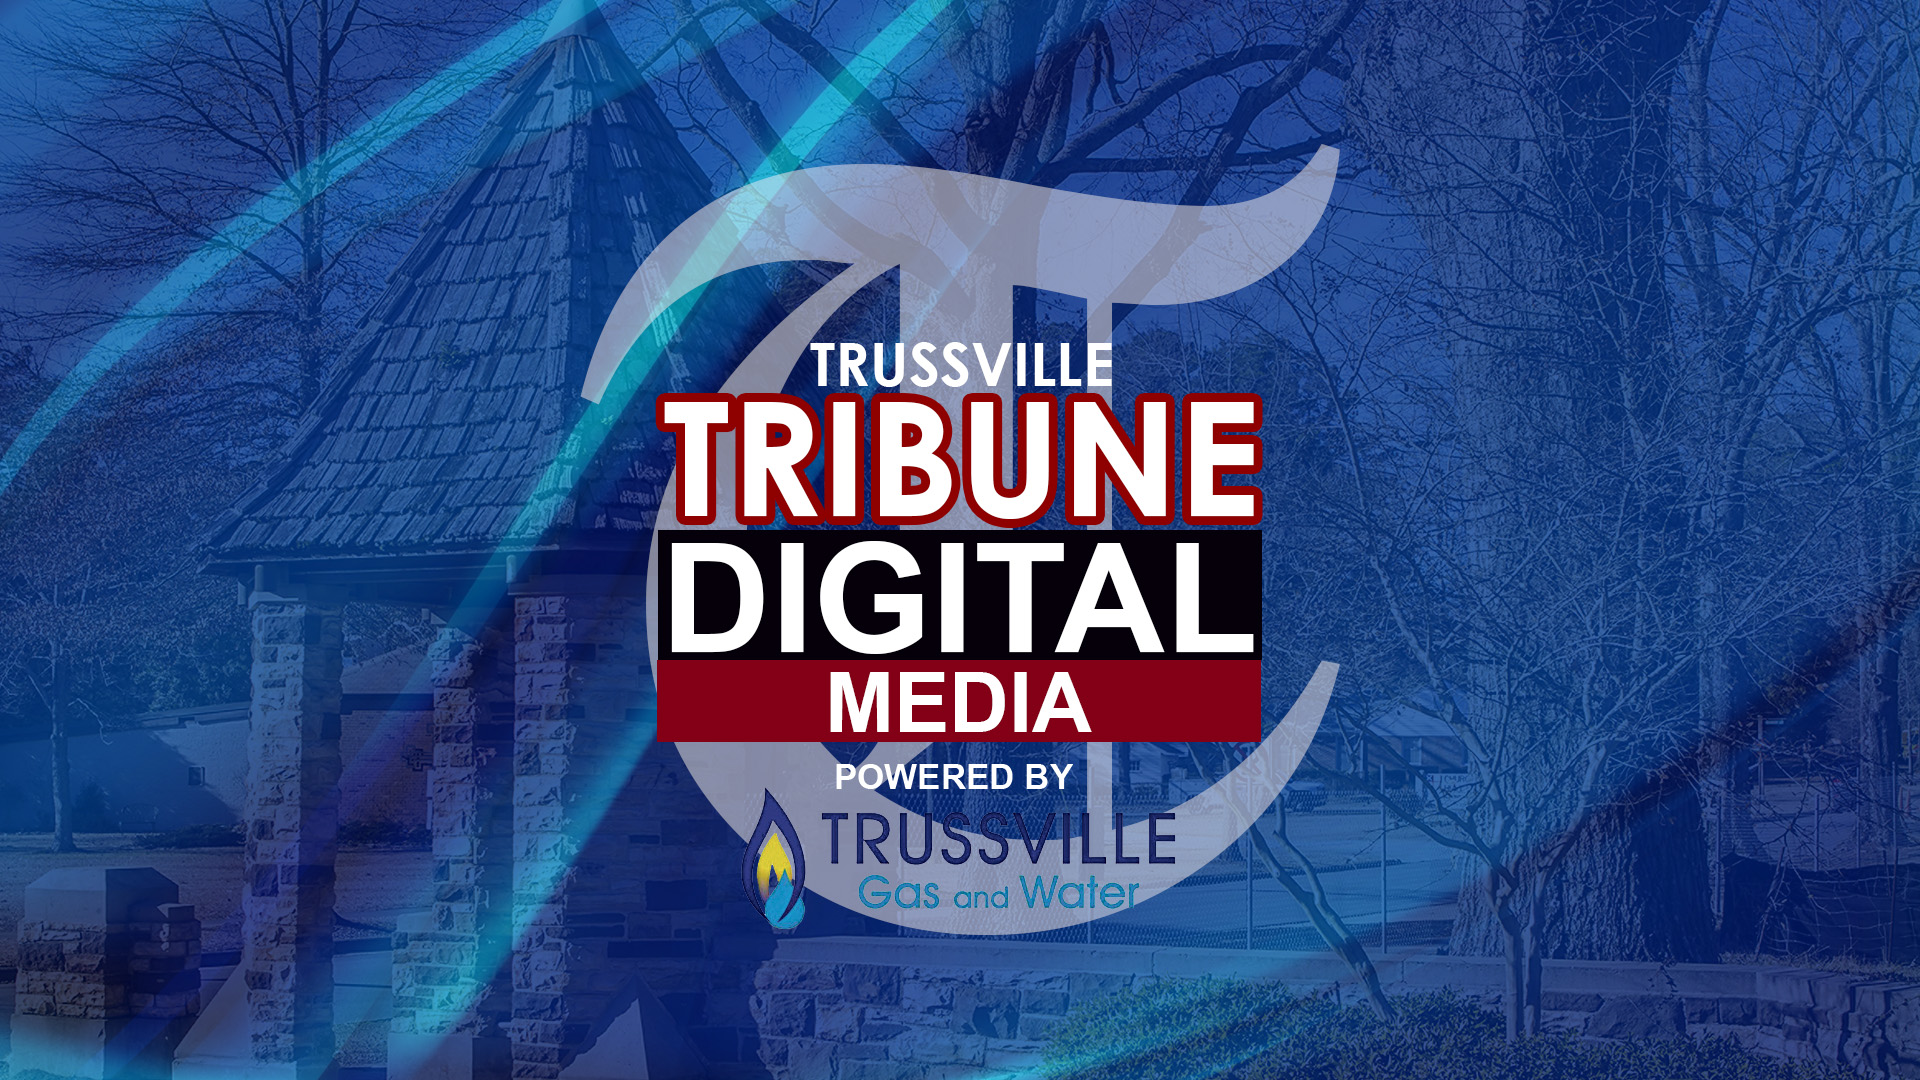 Hewitt-Trussville football raising funds for upcoming season